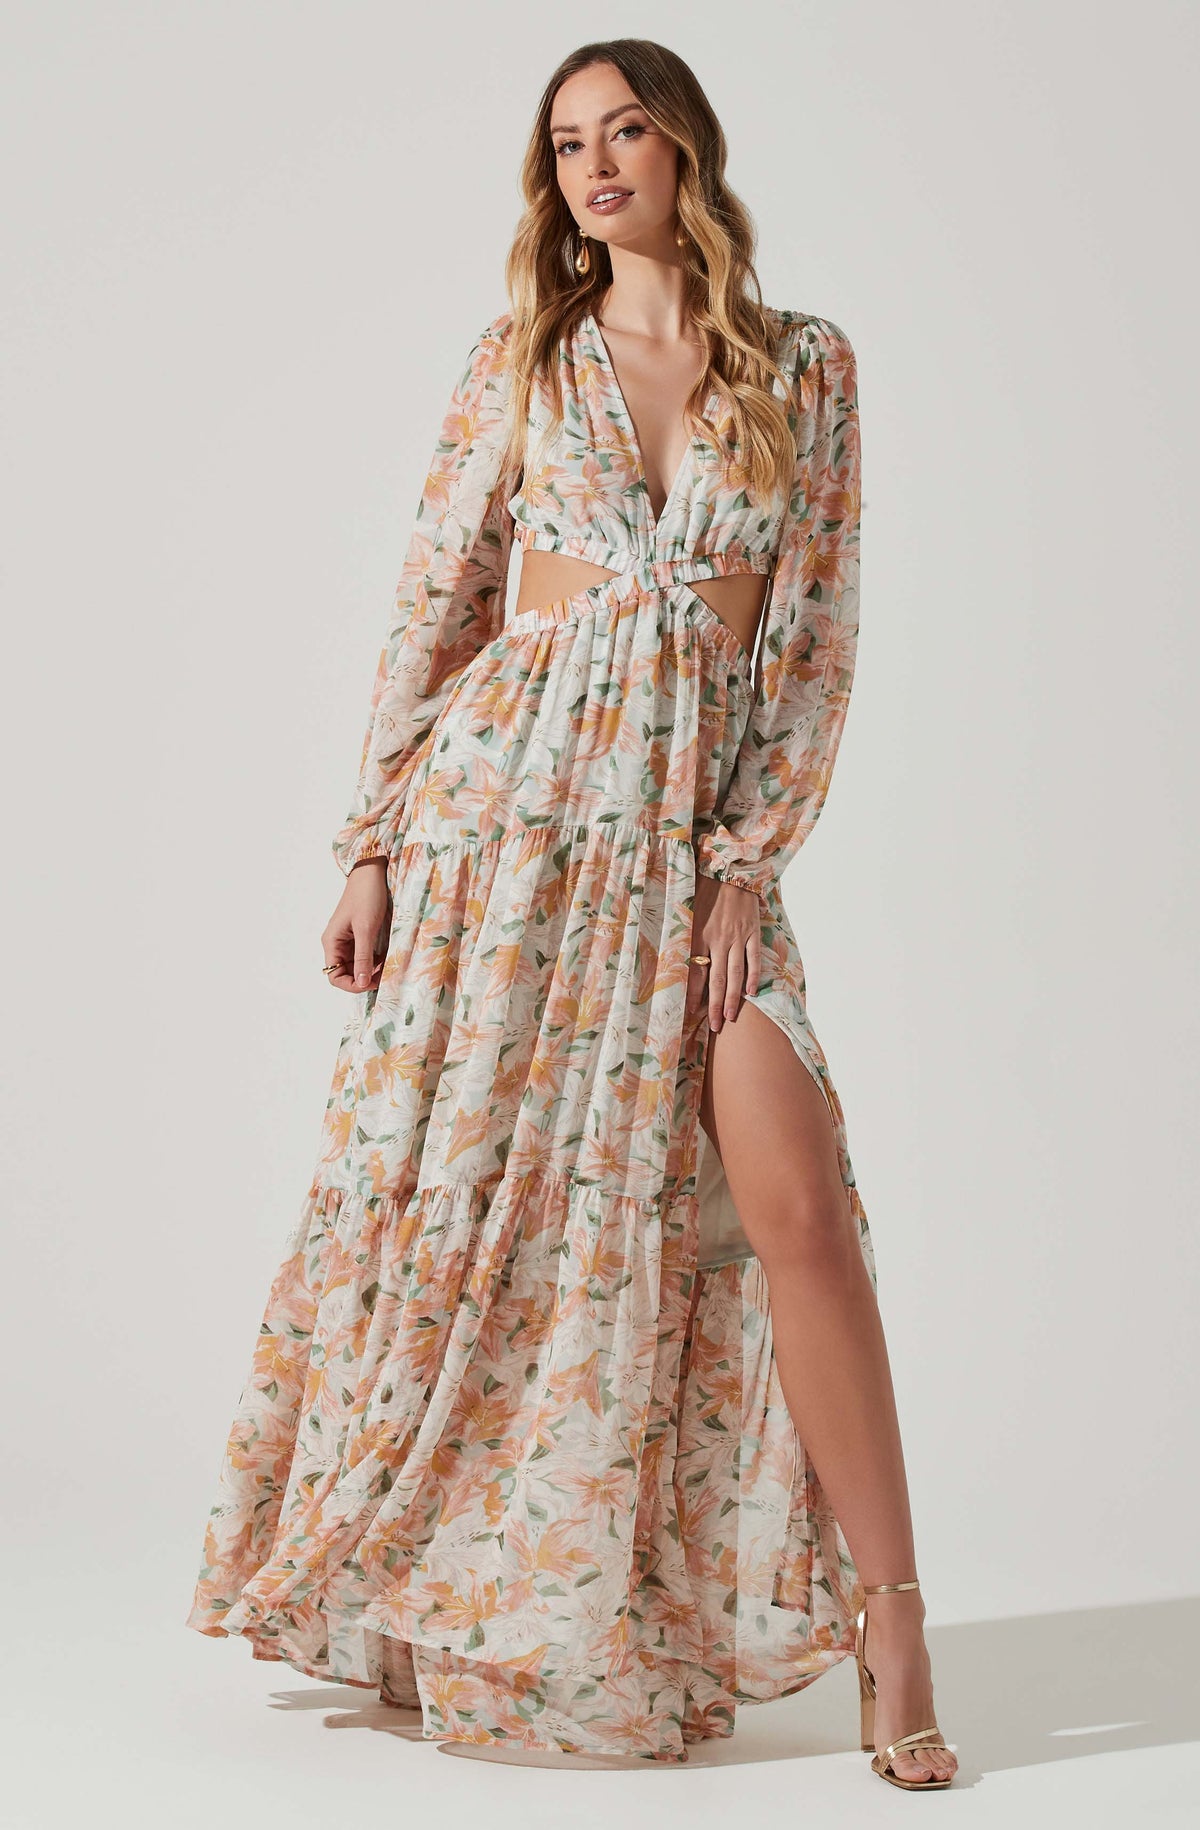 Cream Floral Print Dress - Ruffled Maxi Dress - Puff Sleeve Dress - Lulus